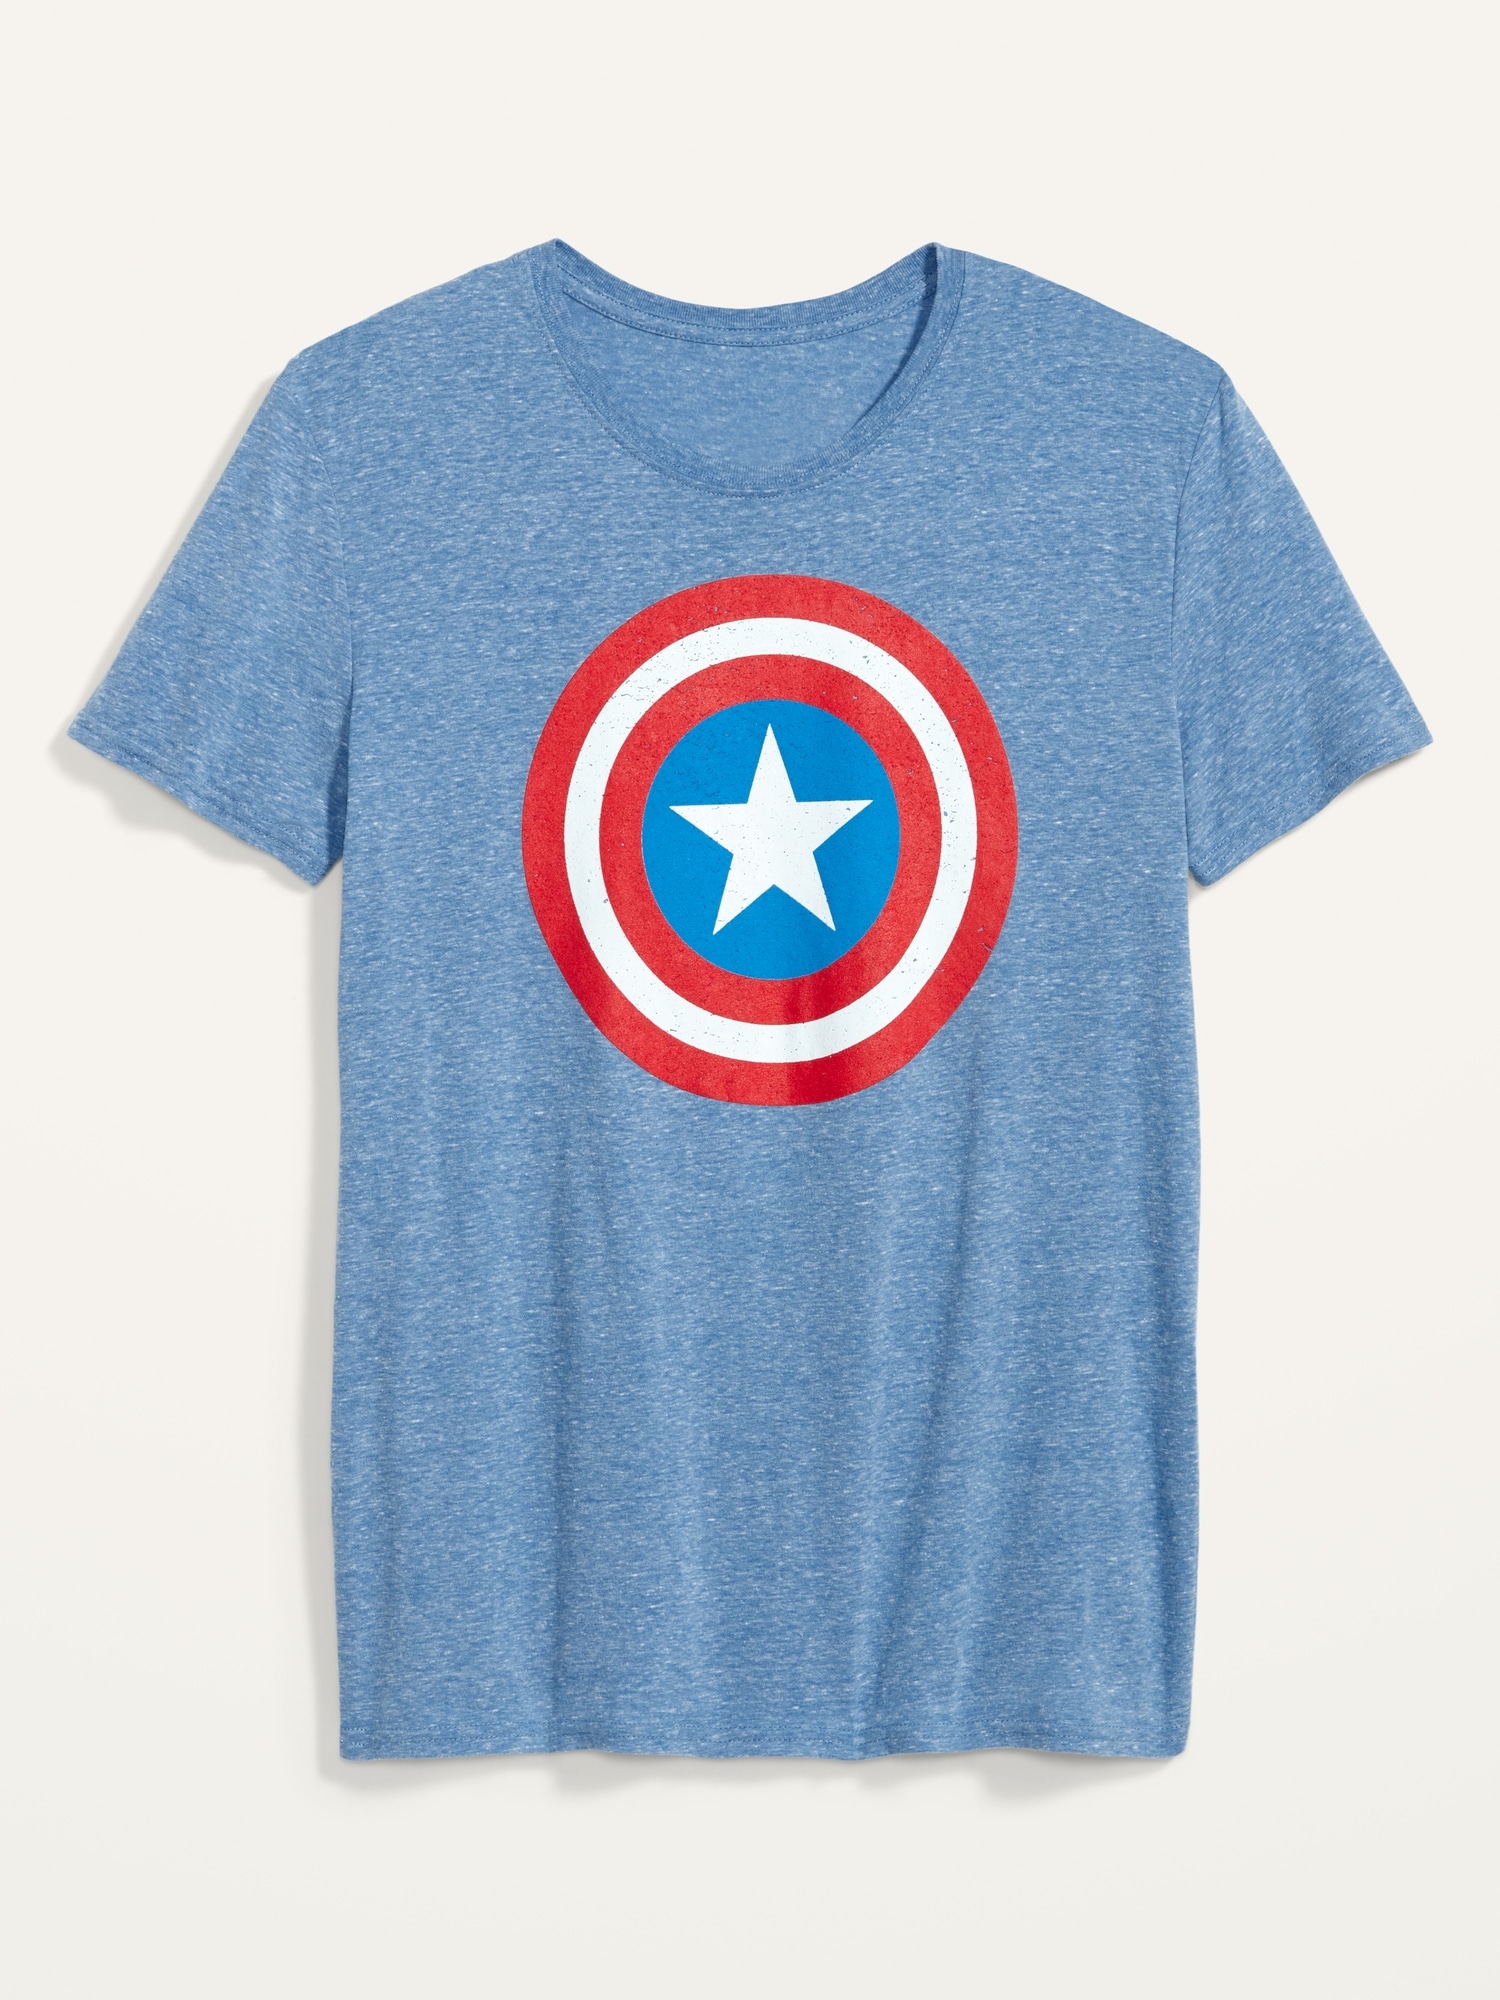 Marvel Men's Captain America Shield Blue Muscle Tee Licensed Shirt New Polyester